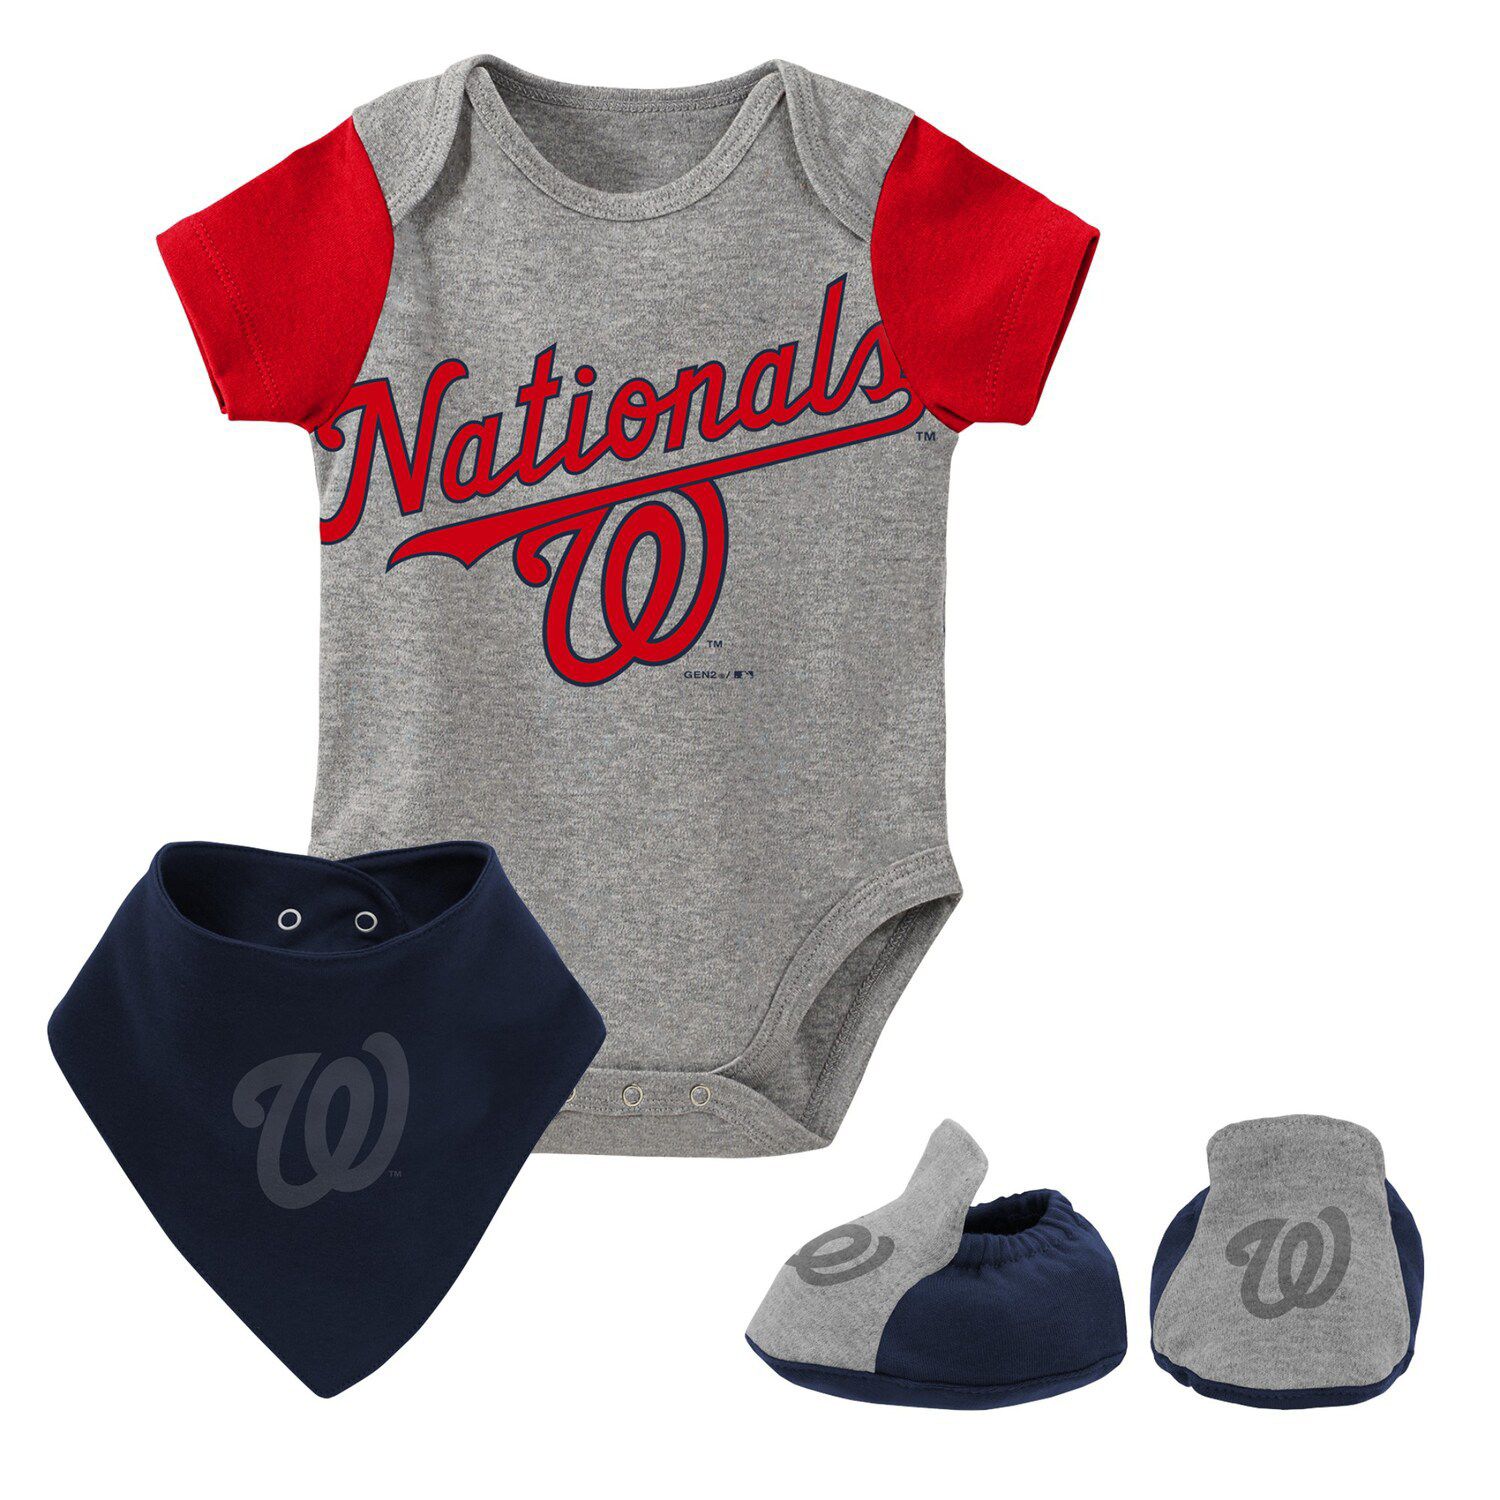 Washington Nationals Baby Clothing, Nationals Infant Jerseys